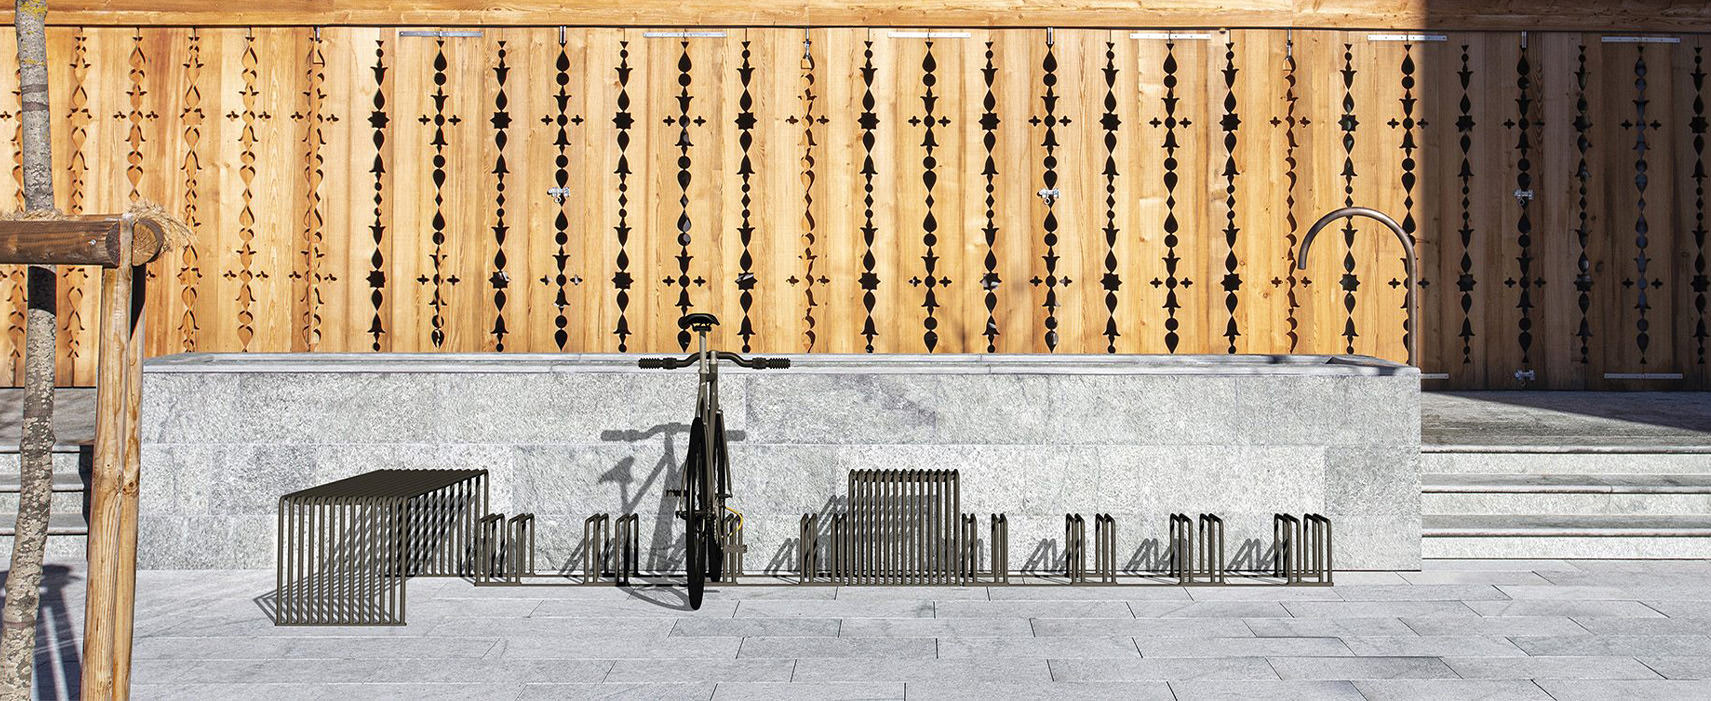 Streetscape bike racks.